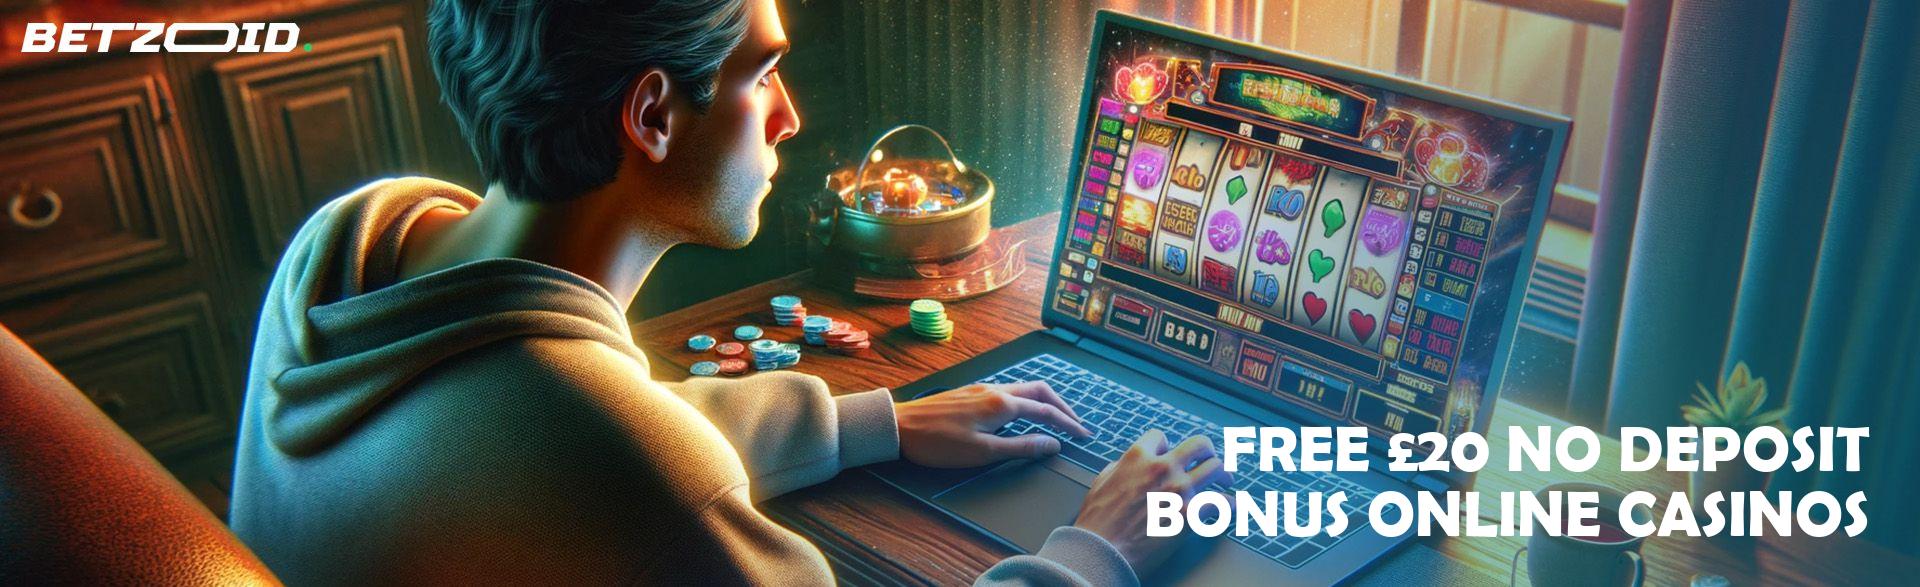 Free £20 No Deposit Bonus Online Casinos.